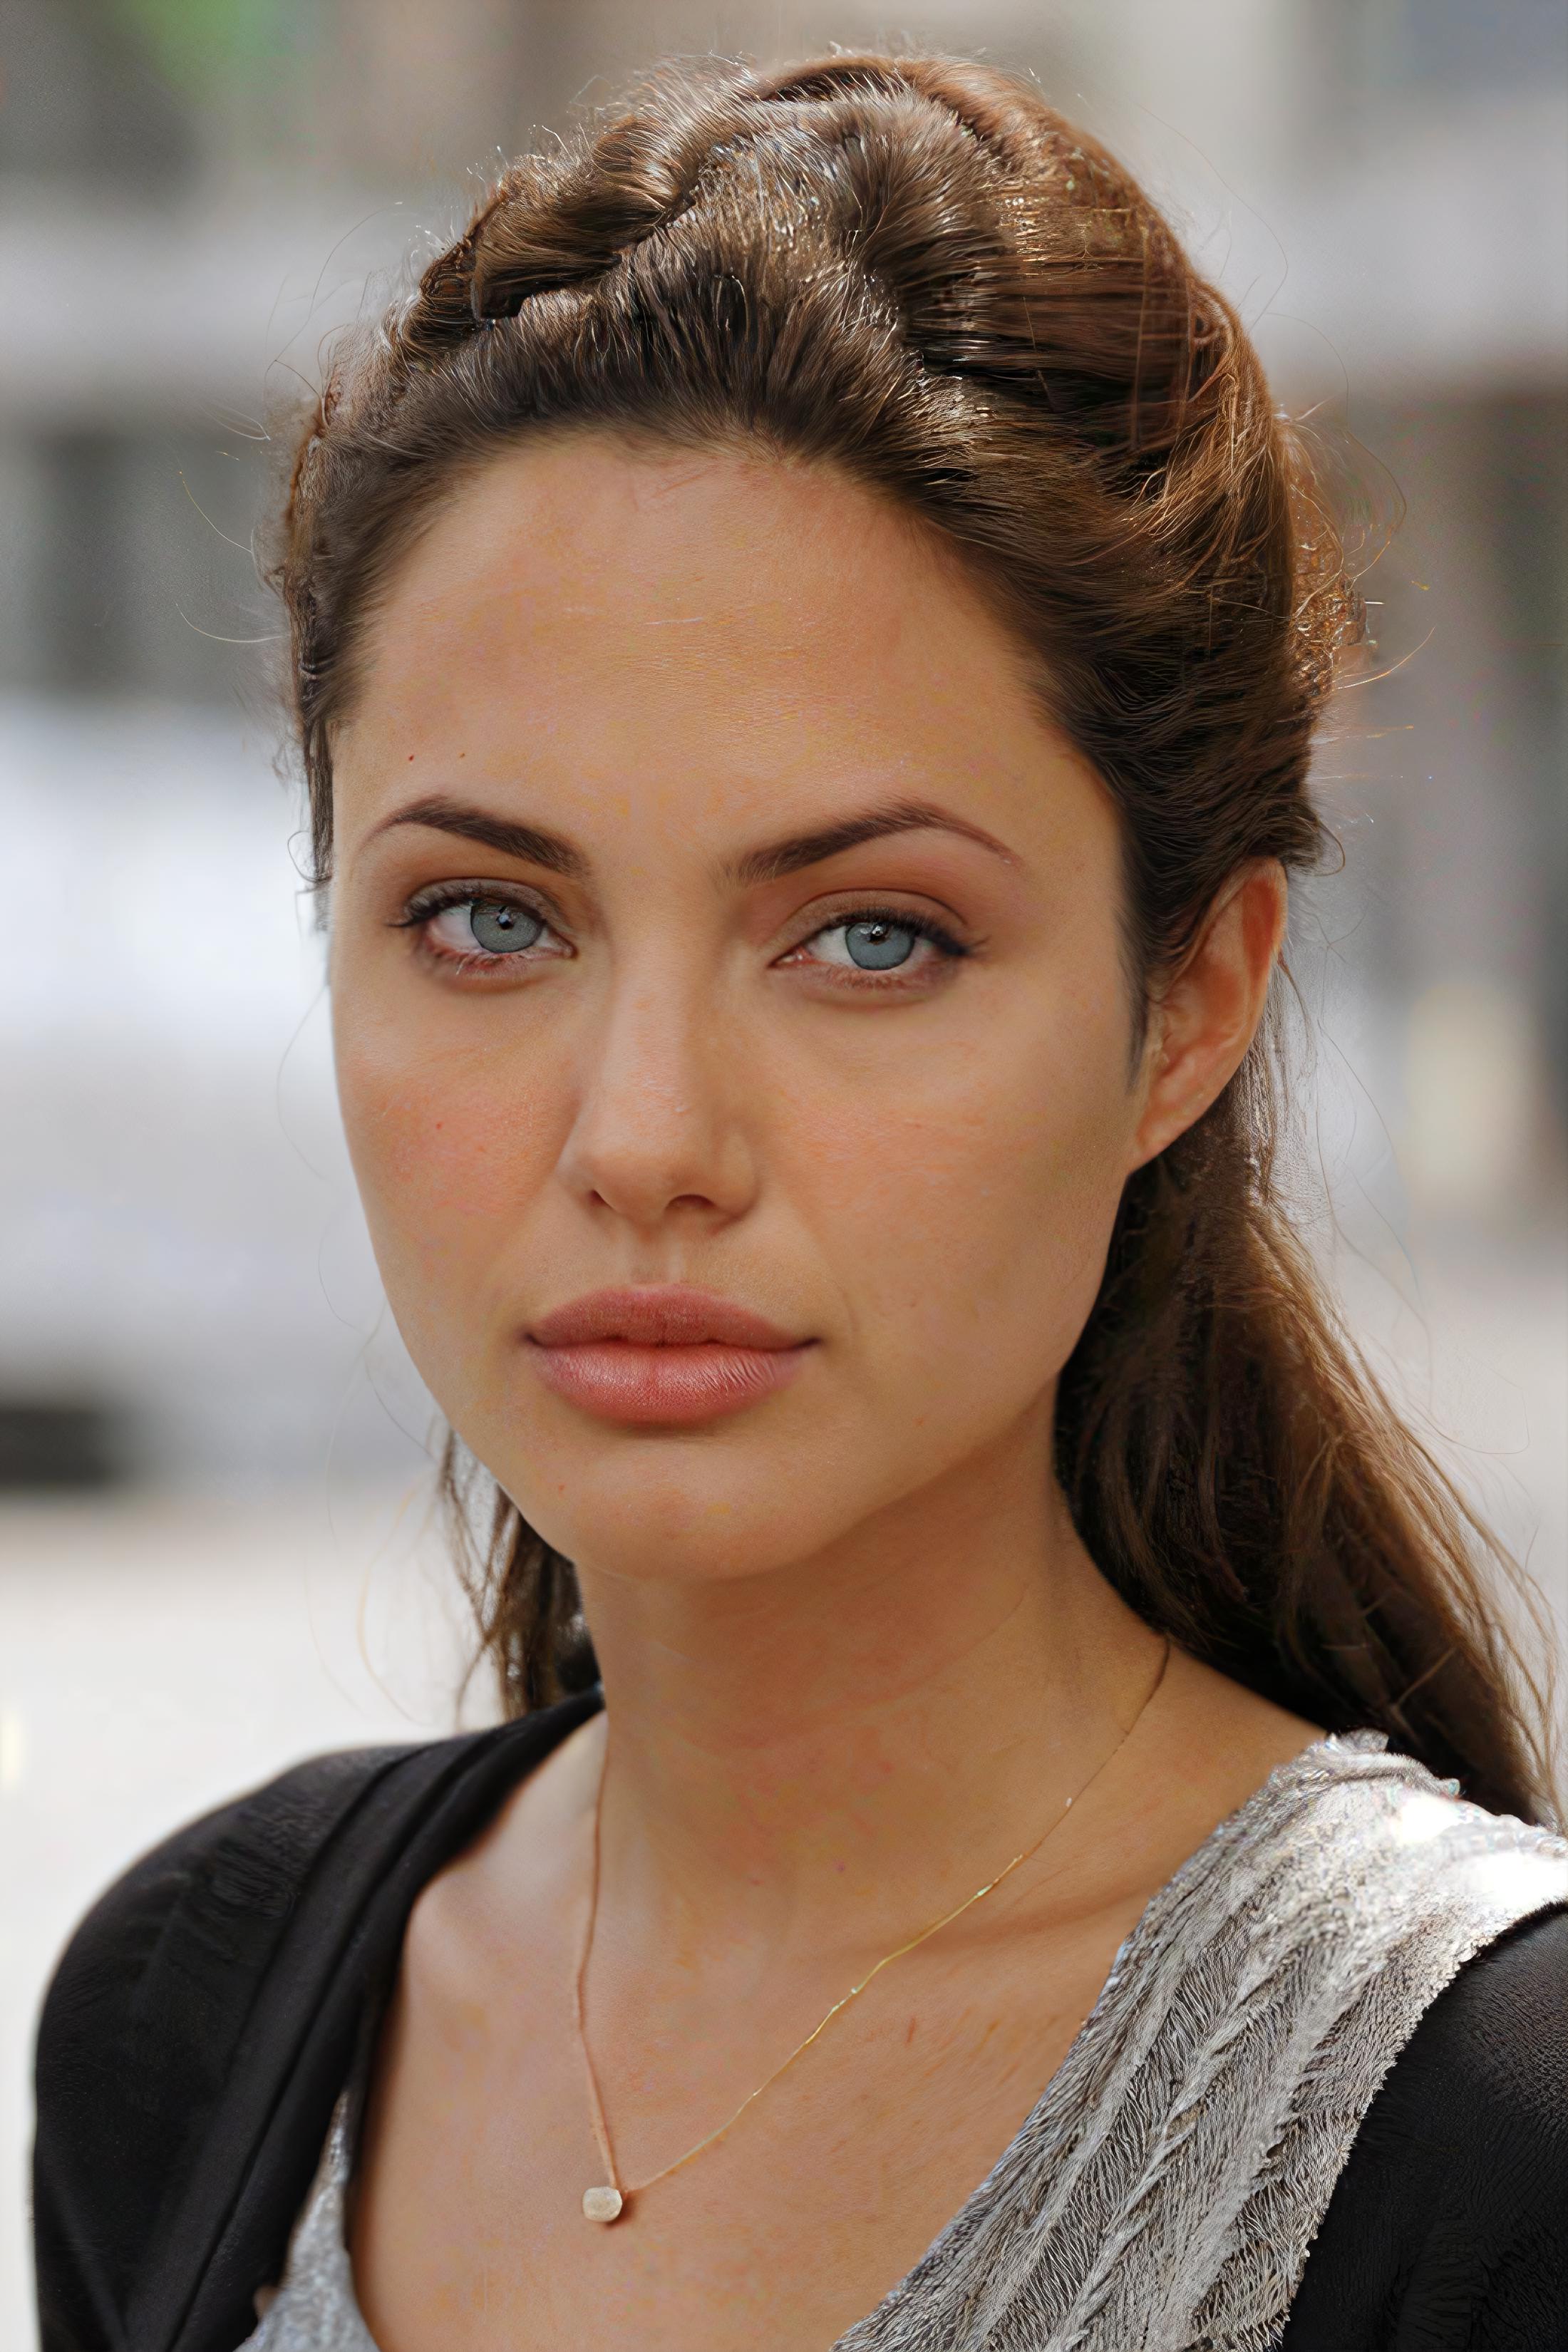 Angelina Jolie / Tomb Raider image by __2_